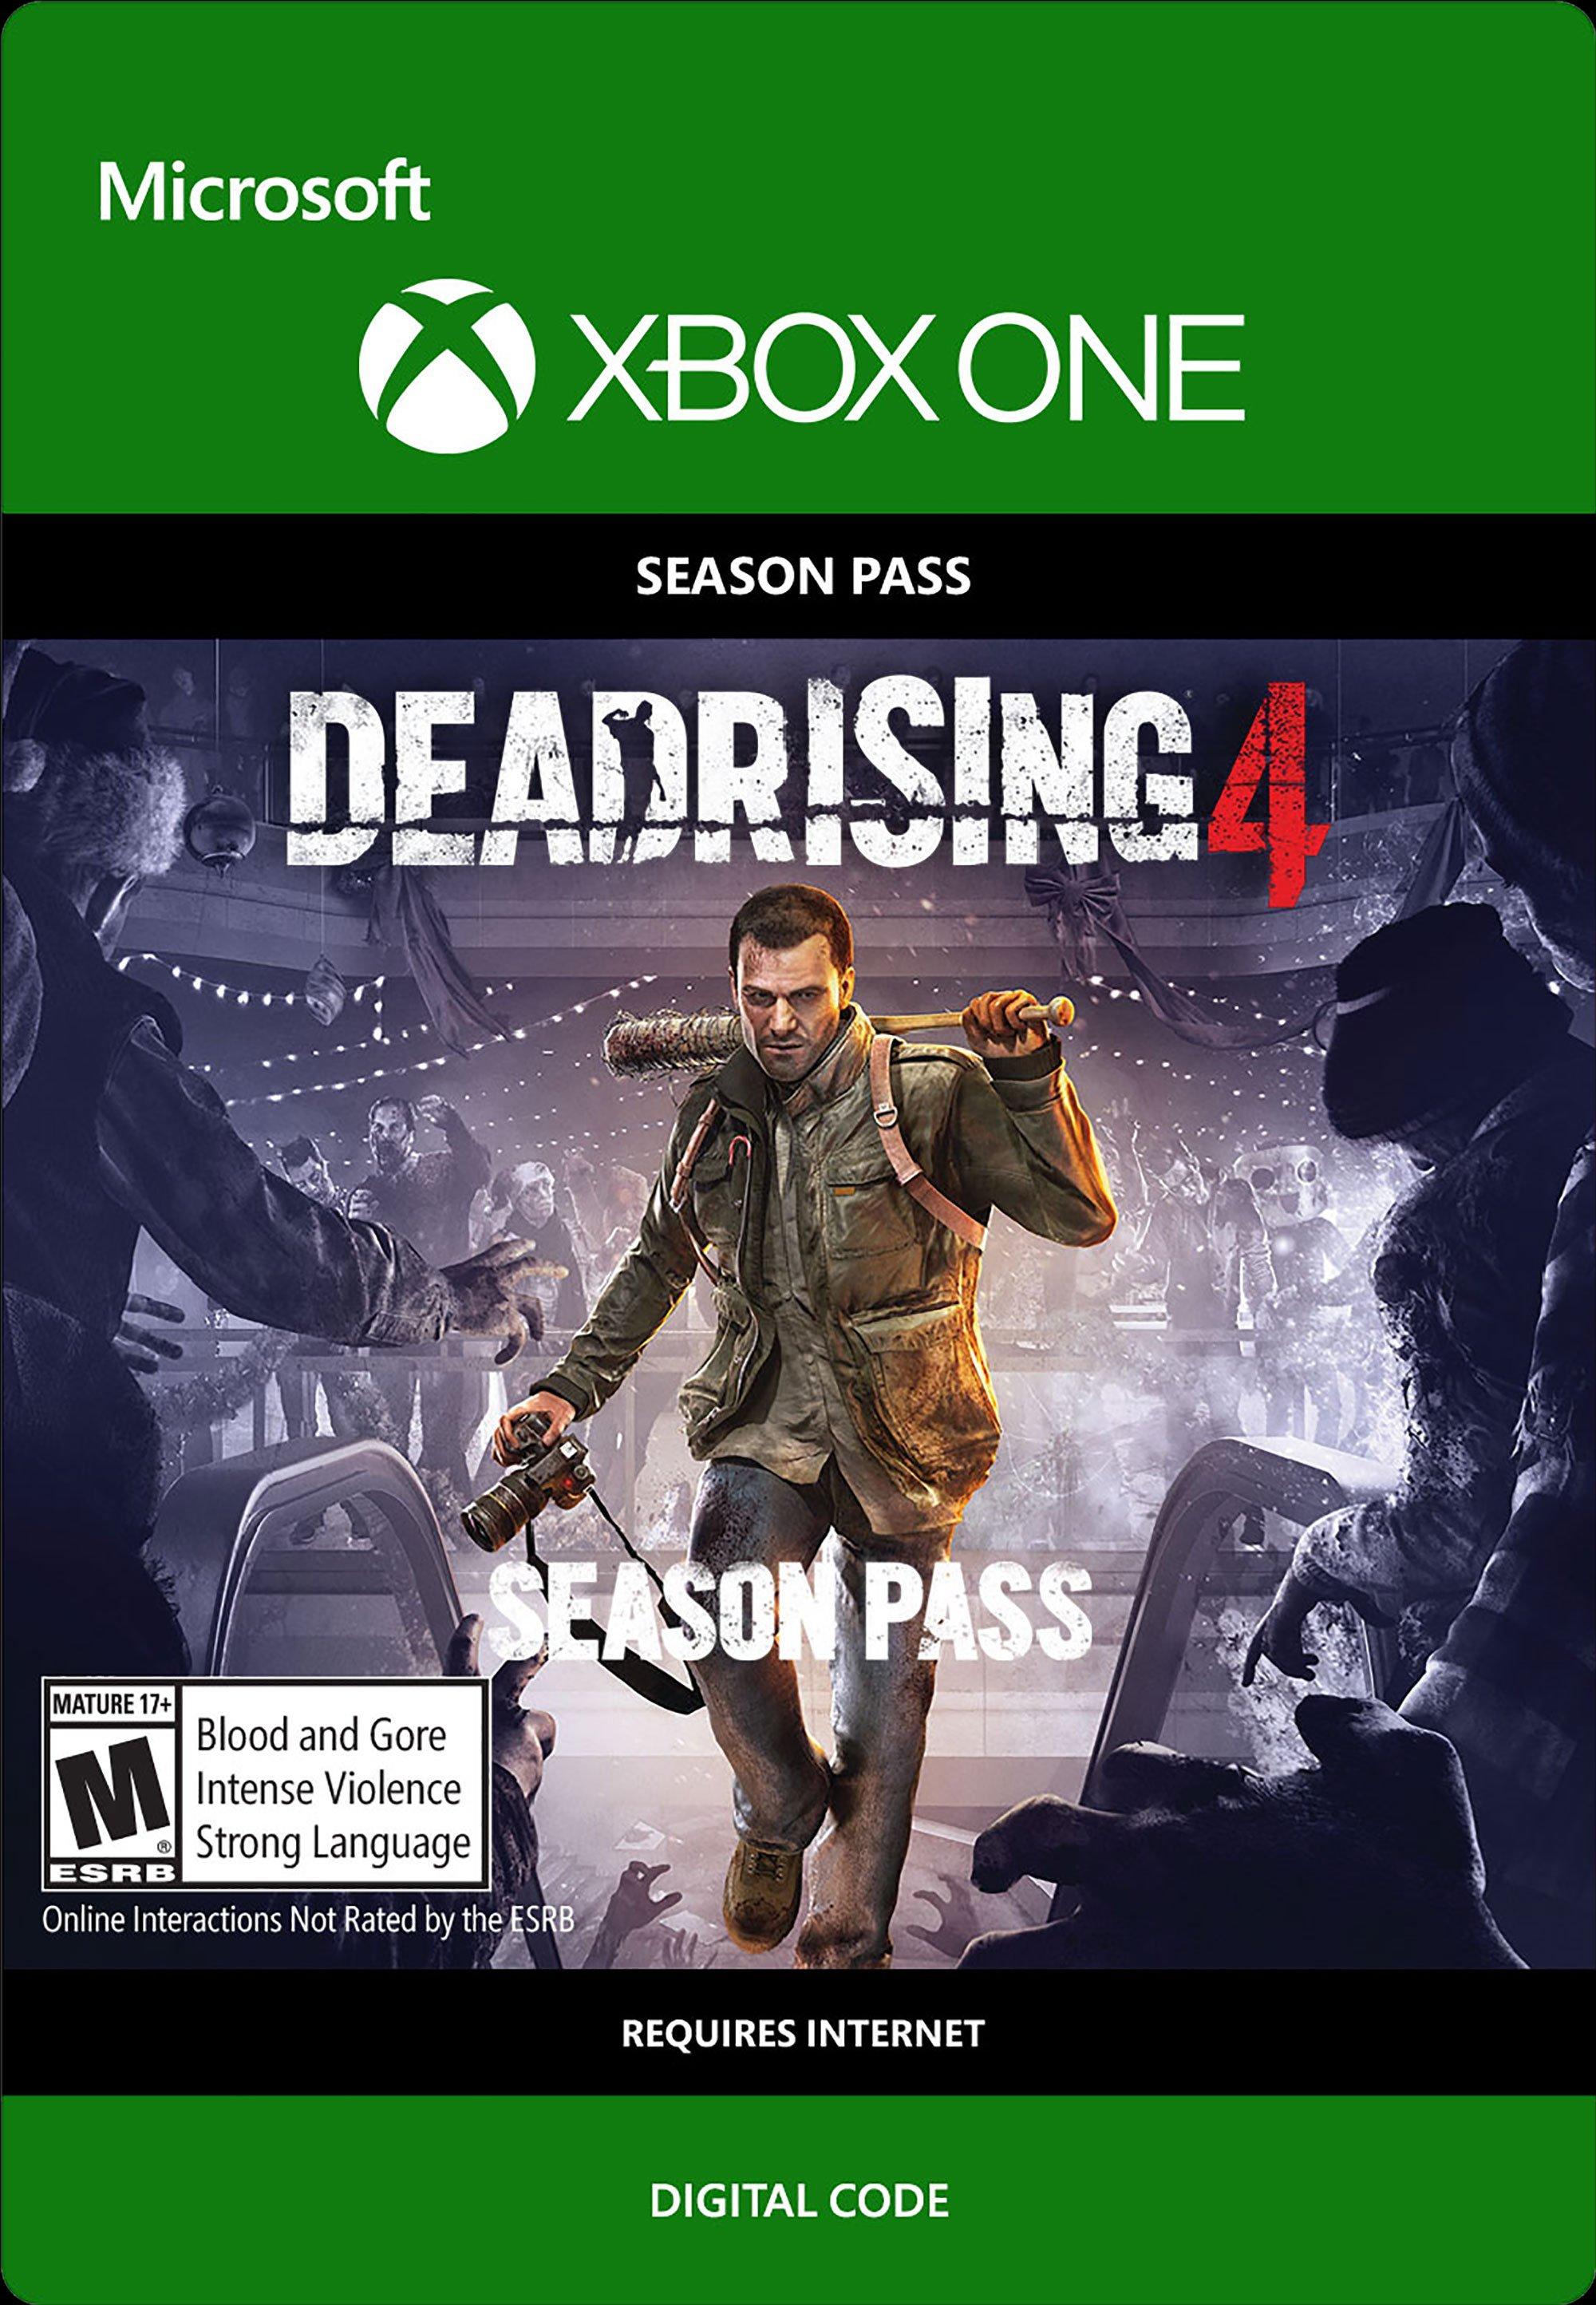 Buy Dead Rising 4 Season Pass Cd Key Steam Global